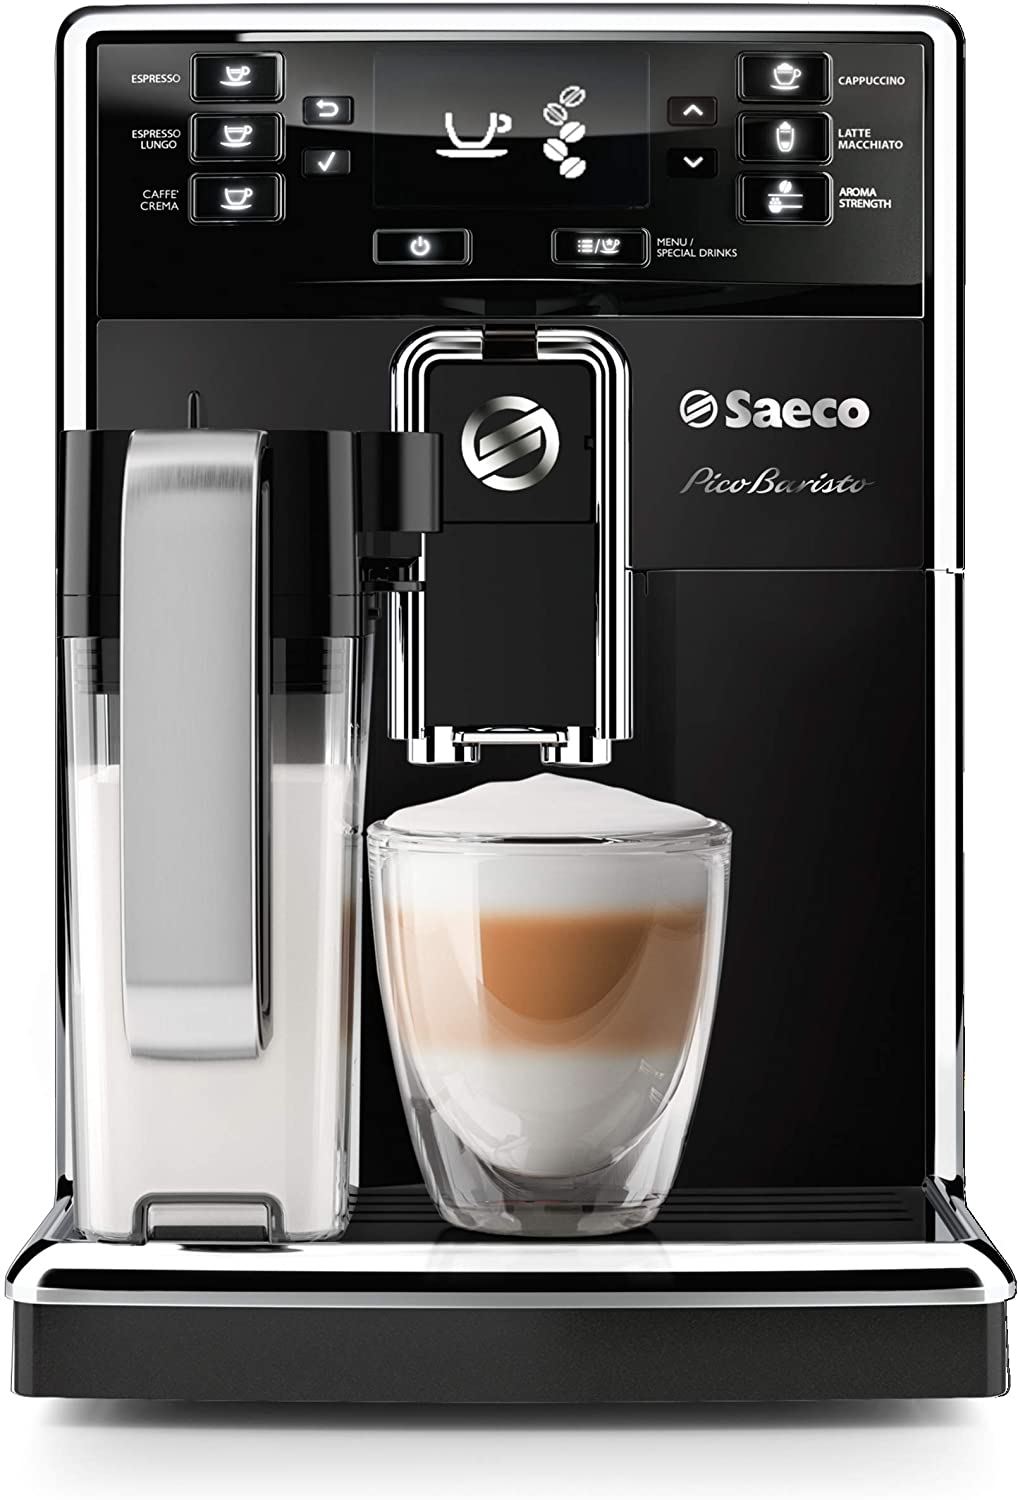 Moist plan boom Saeco PicoBaristo Ceramic Grinders Espresso Machine